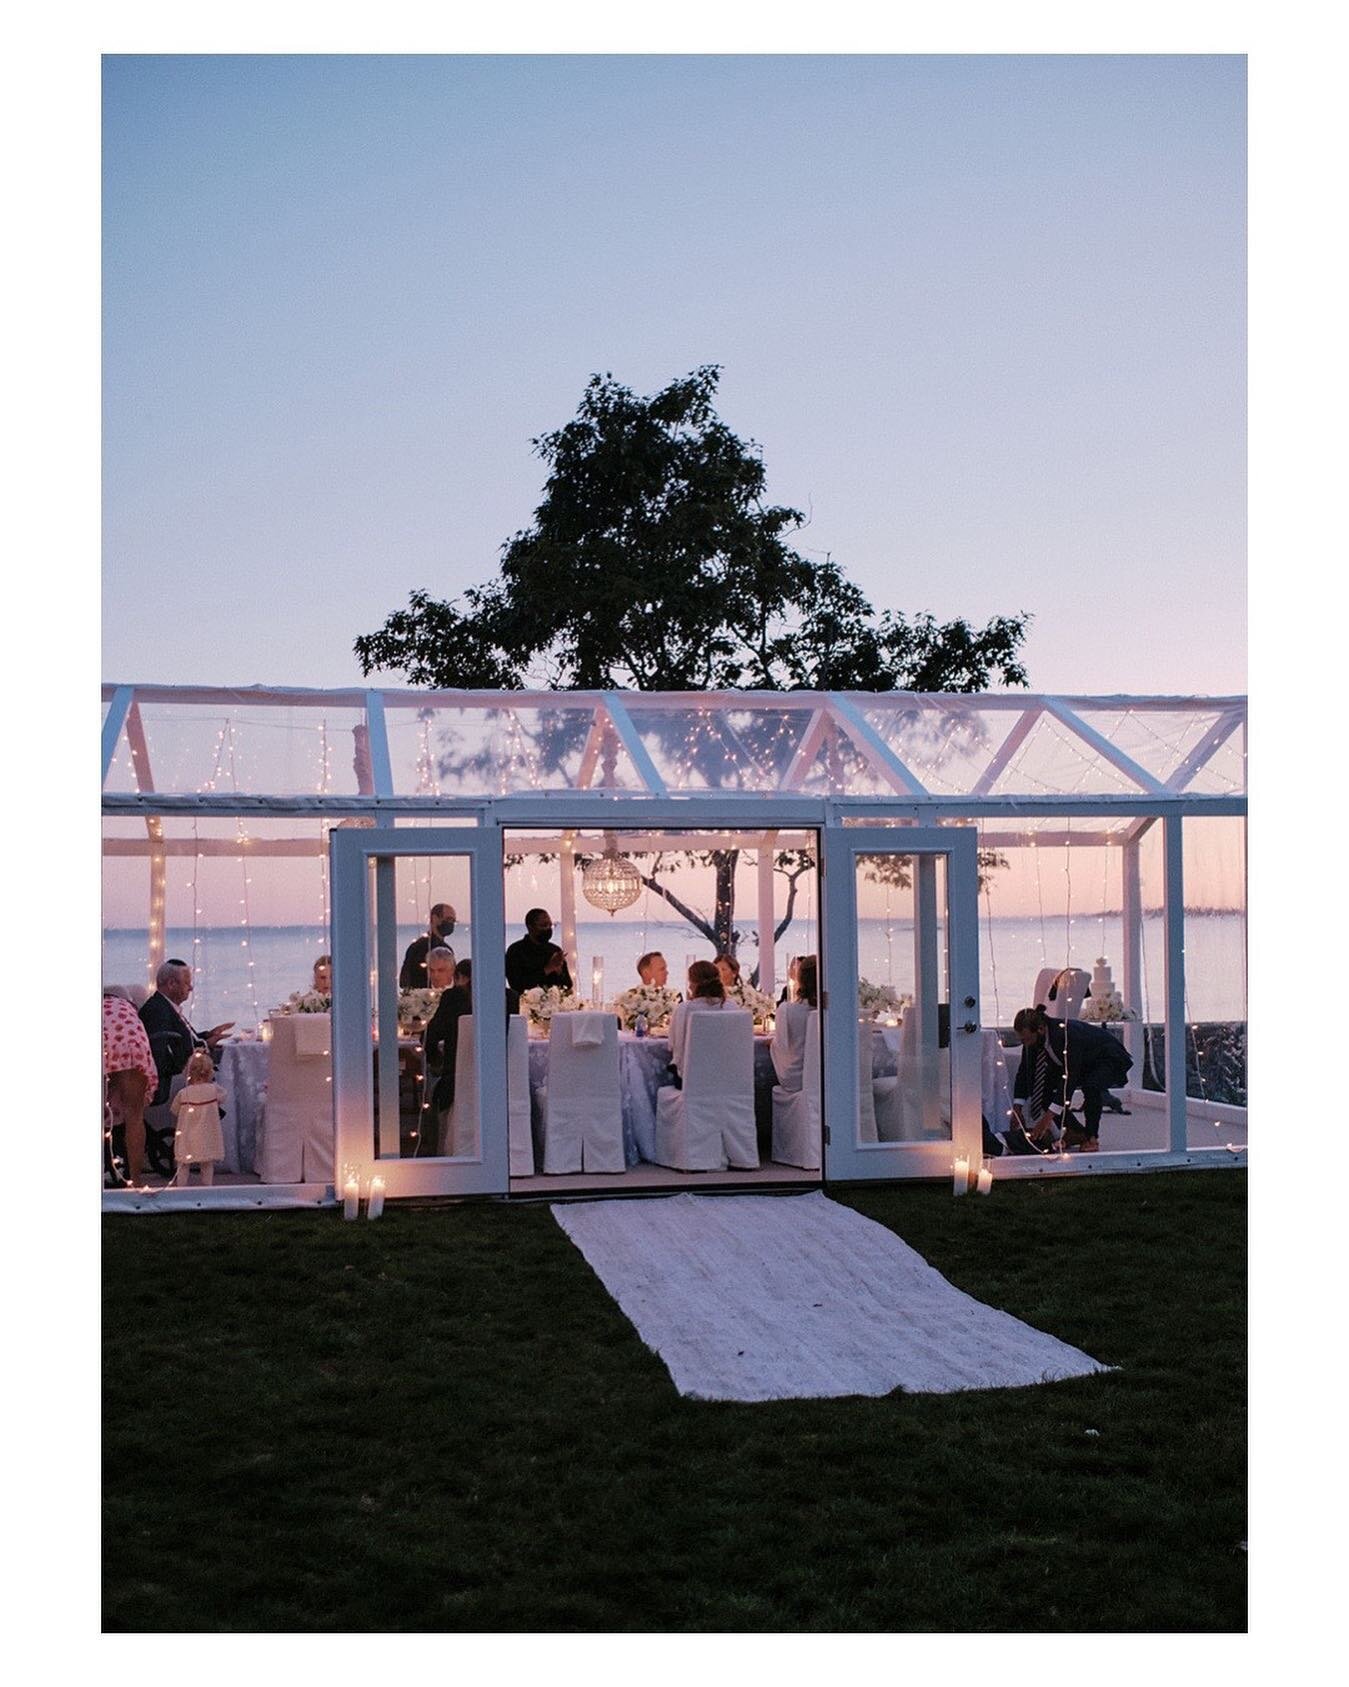 The perfect setting to celebrate 🤍
⠀⠀⠀⠀⠀⠀⠀⠀⠀
⠀⠀⠀⠀⠀⠀⠀⠀⠀

📷 @rickyrodriguezphoto
📋 @sarakovelevents_
⠀⠀⠀⠀⠀⠀⠀⠀⠀
⠀⠀⠀⠀⠀⠀⠀⠀⠀
⠀⠀⠀⠀⠀⠀⠀⠀⠀
⠀⠀⠀⠀⠀⠀⠀⠀⠀
⠀⠀⠀⠀⠀⠀⠀⠀⠀
#pairwedco #rickyrodriguezphoto #weddinginspiration #love #gettingmarried #instawedding #weddingph